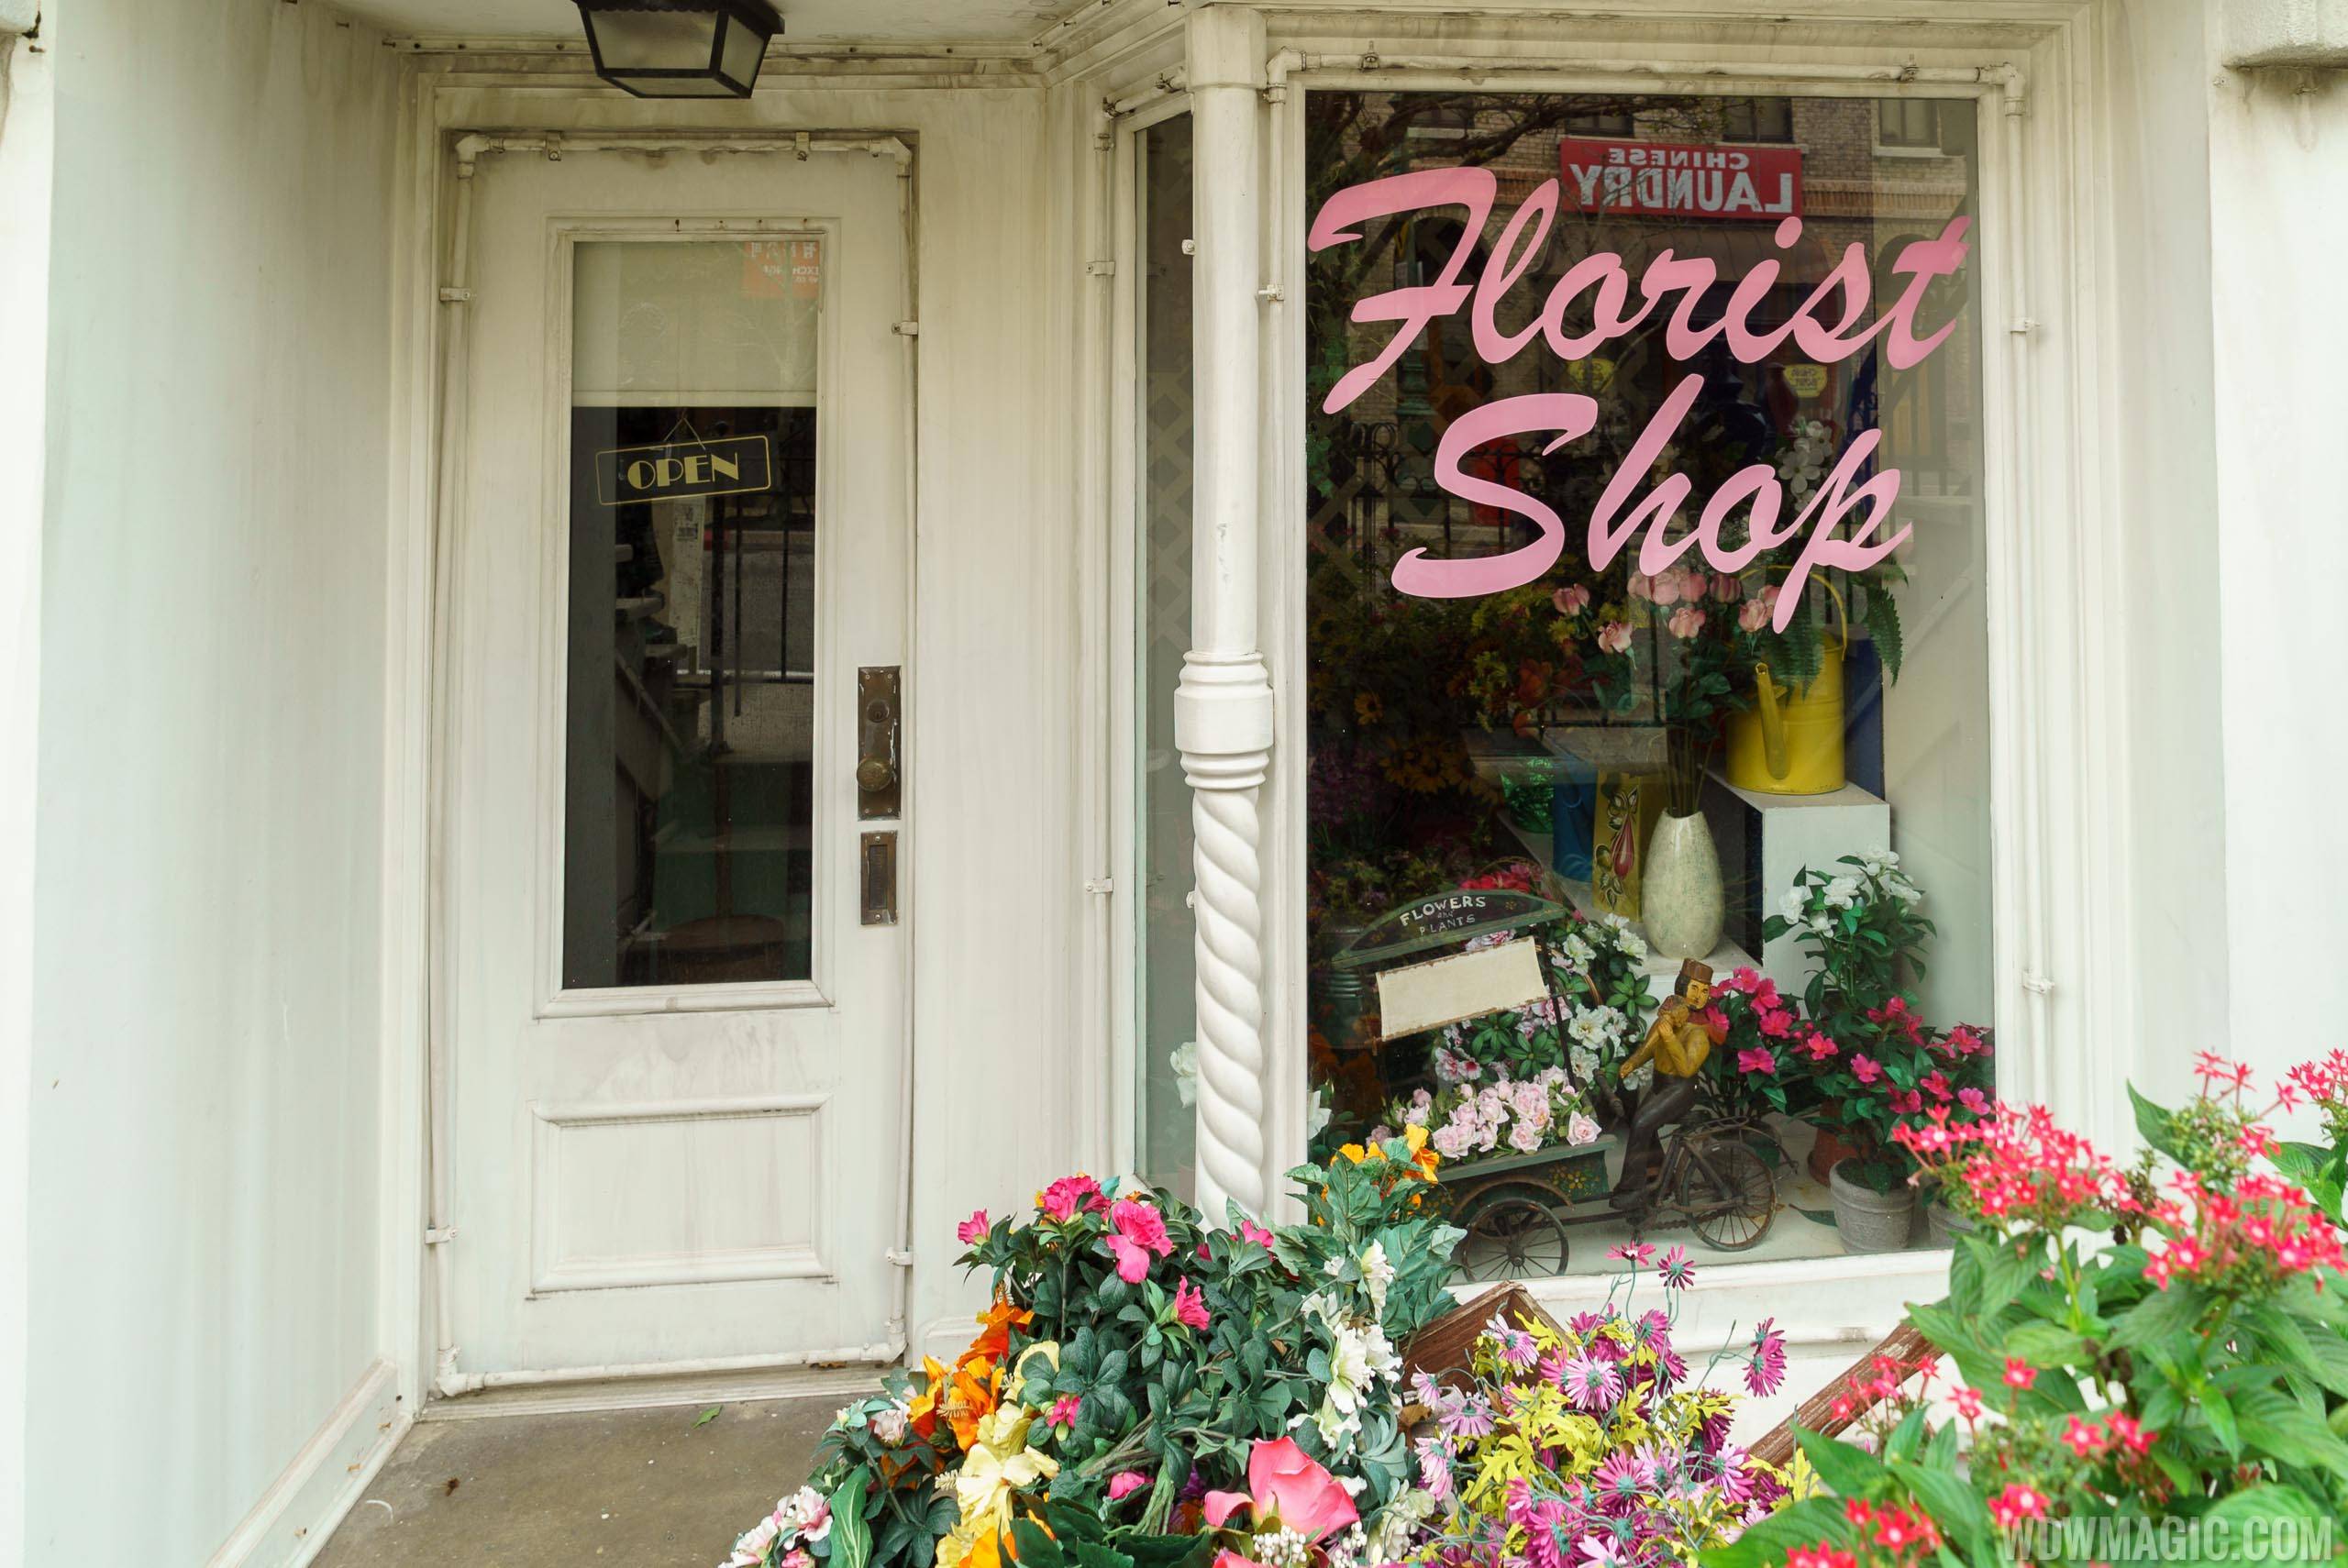 Streets of America facades - San Fransisco Florist Shop